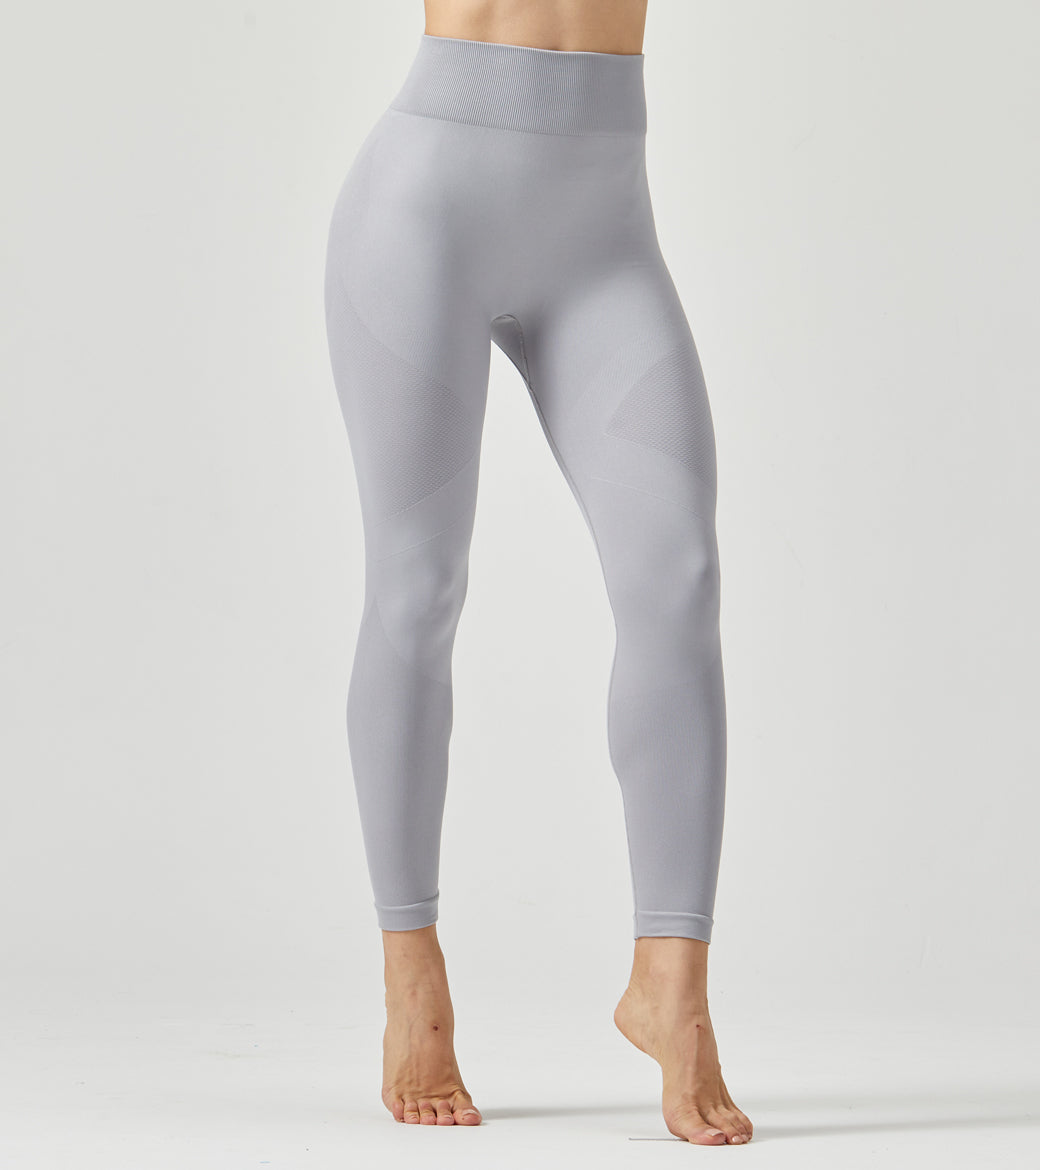 LOVESOFT Grey Seamless Leggings for Women Yoga Workout Tight Pants